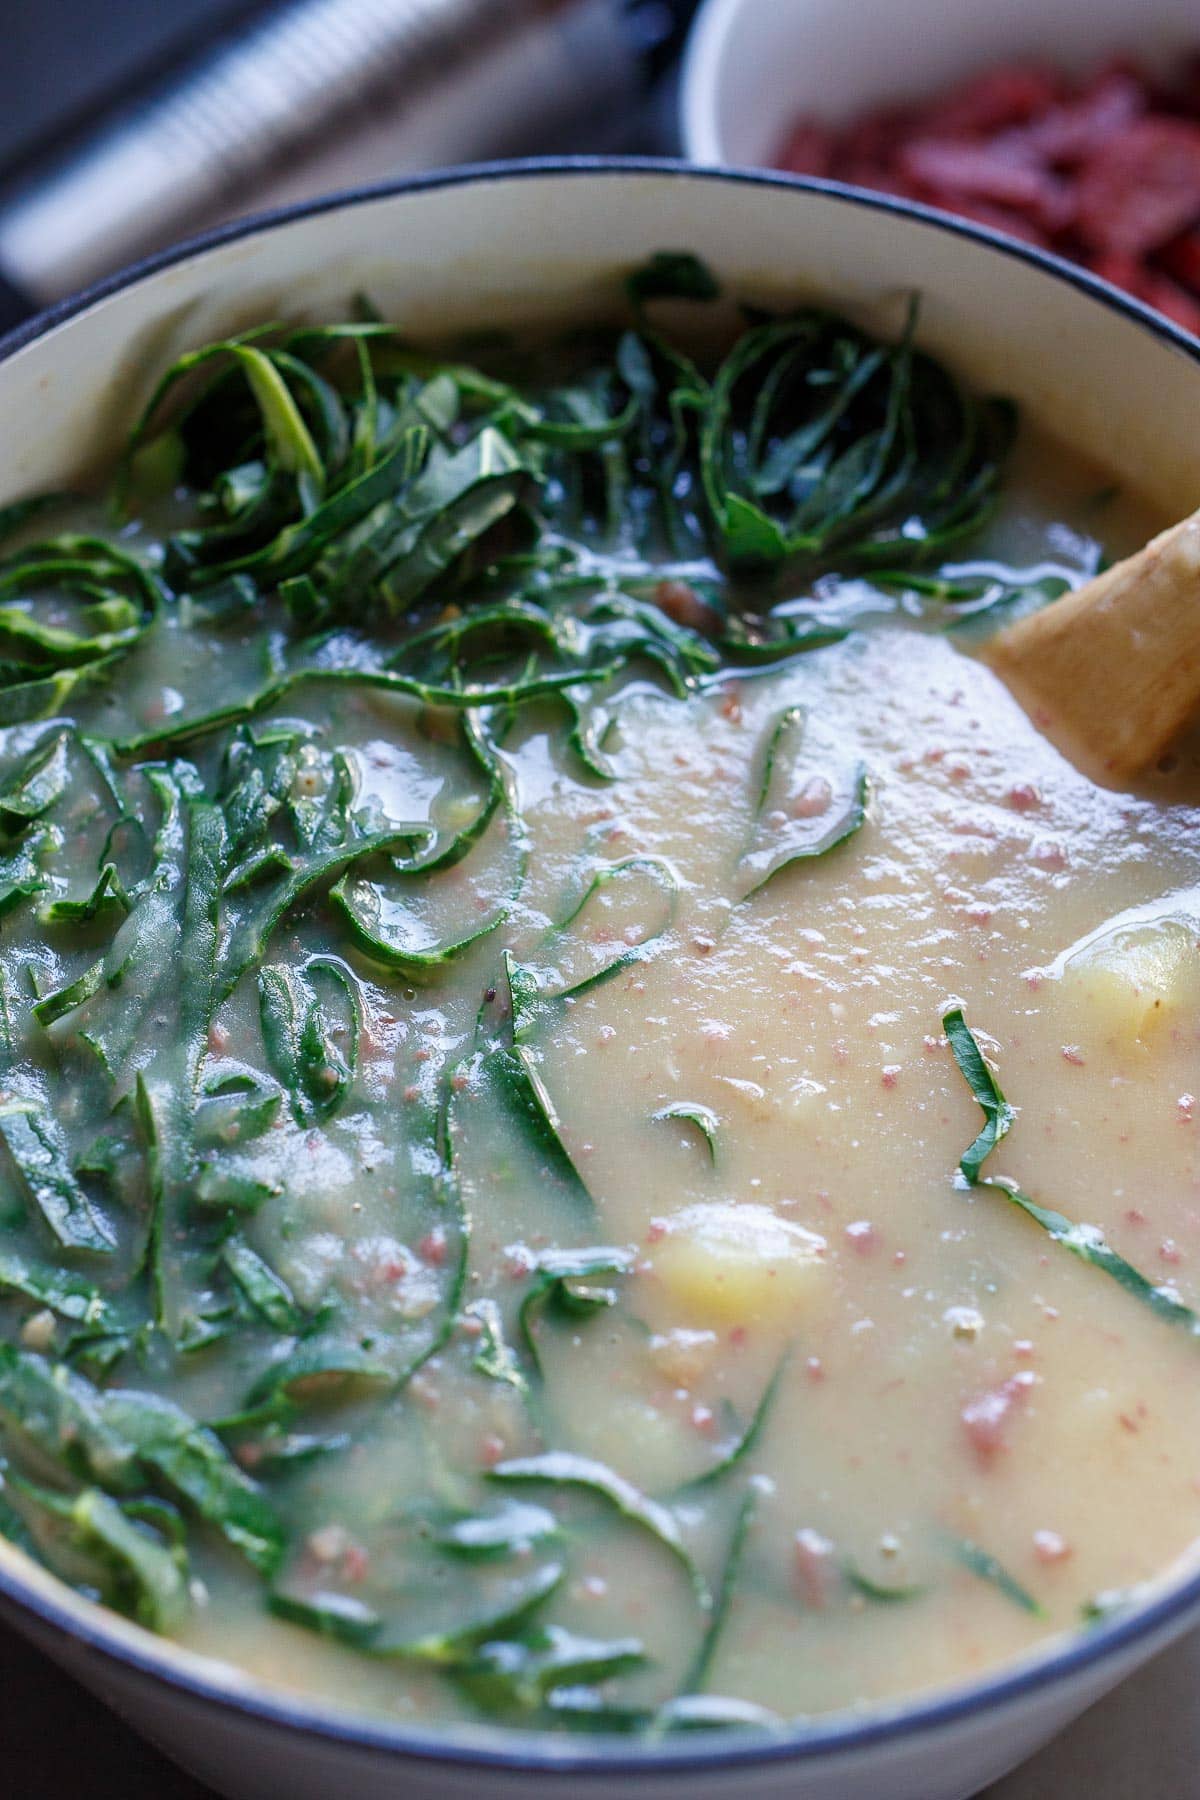 Adding collard greens into the soup.